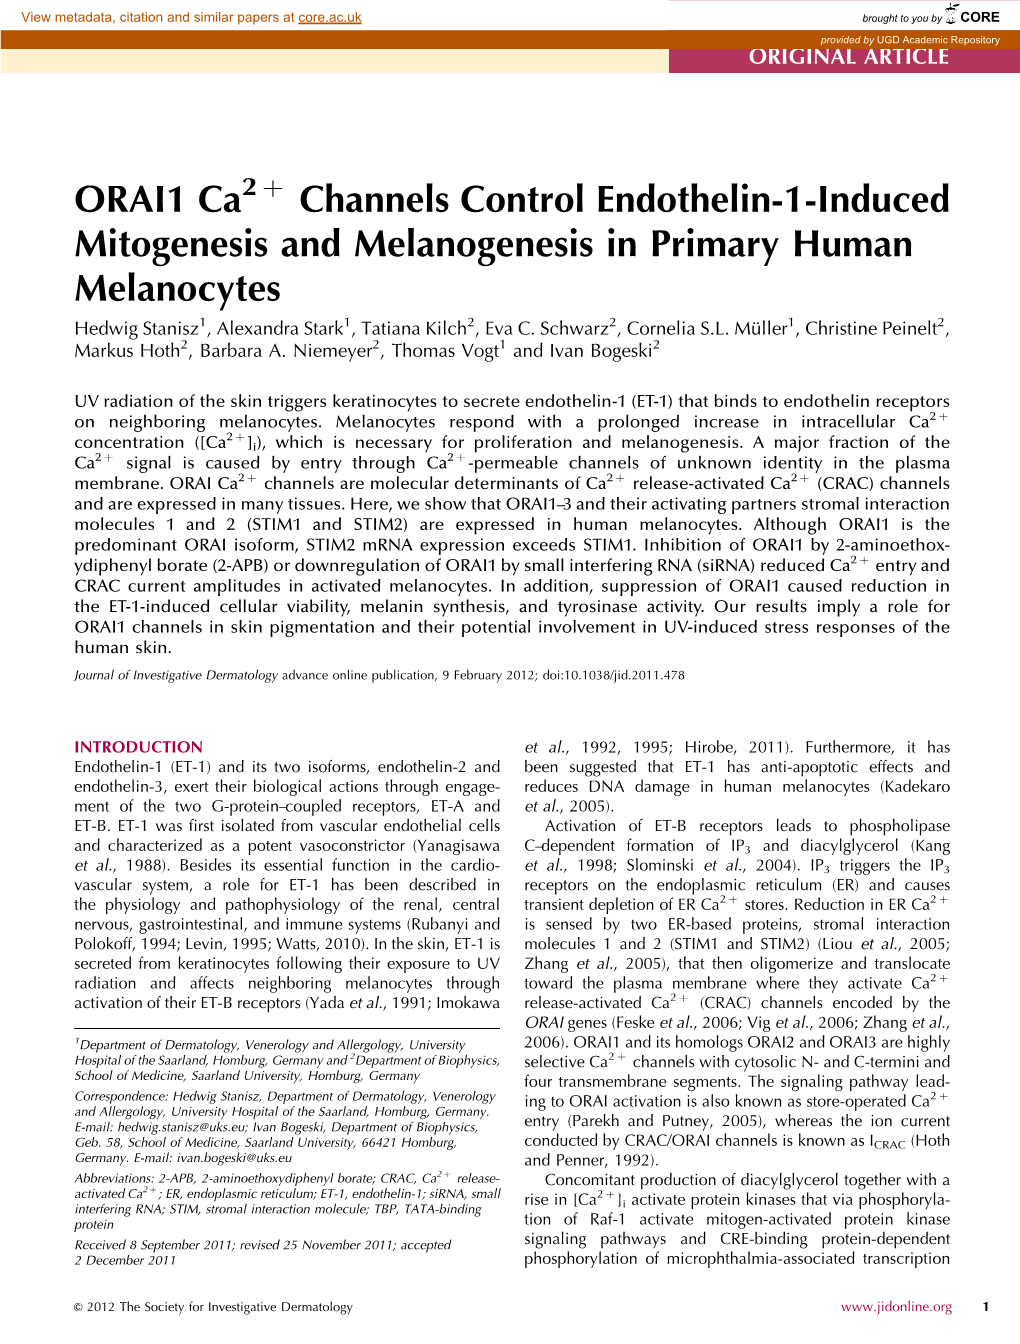 ORAI1 Ca Channels Control Endothelin-1-Induced Mitogenesis